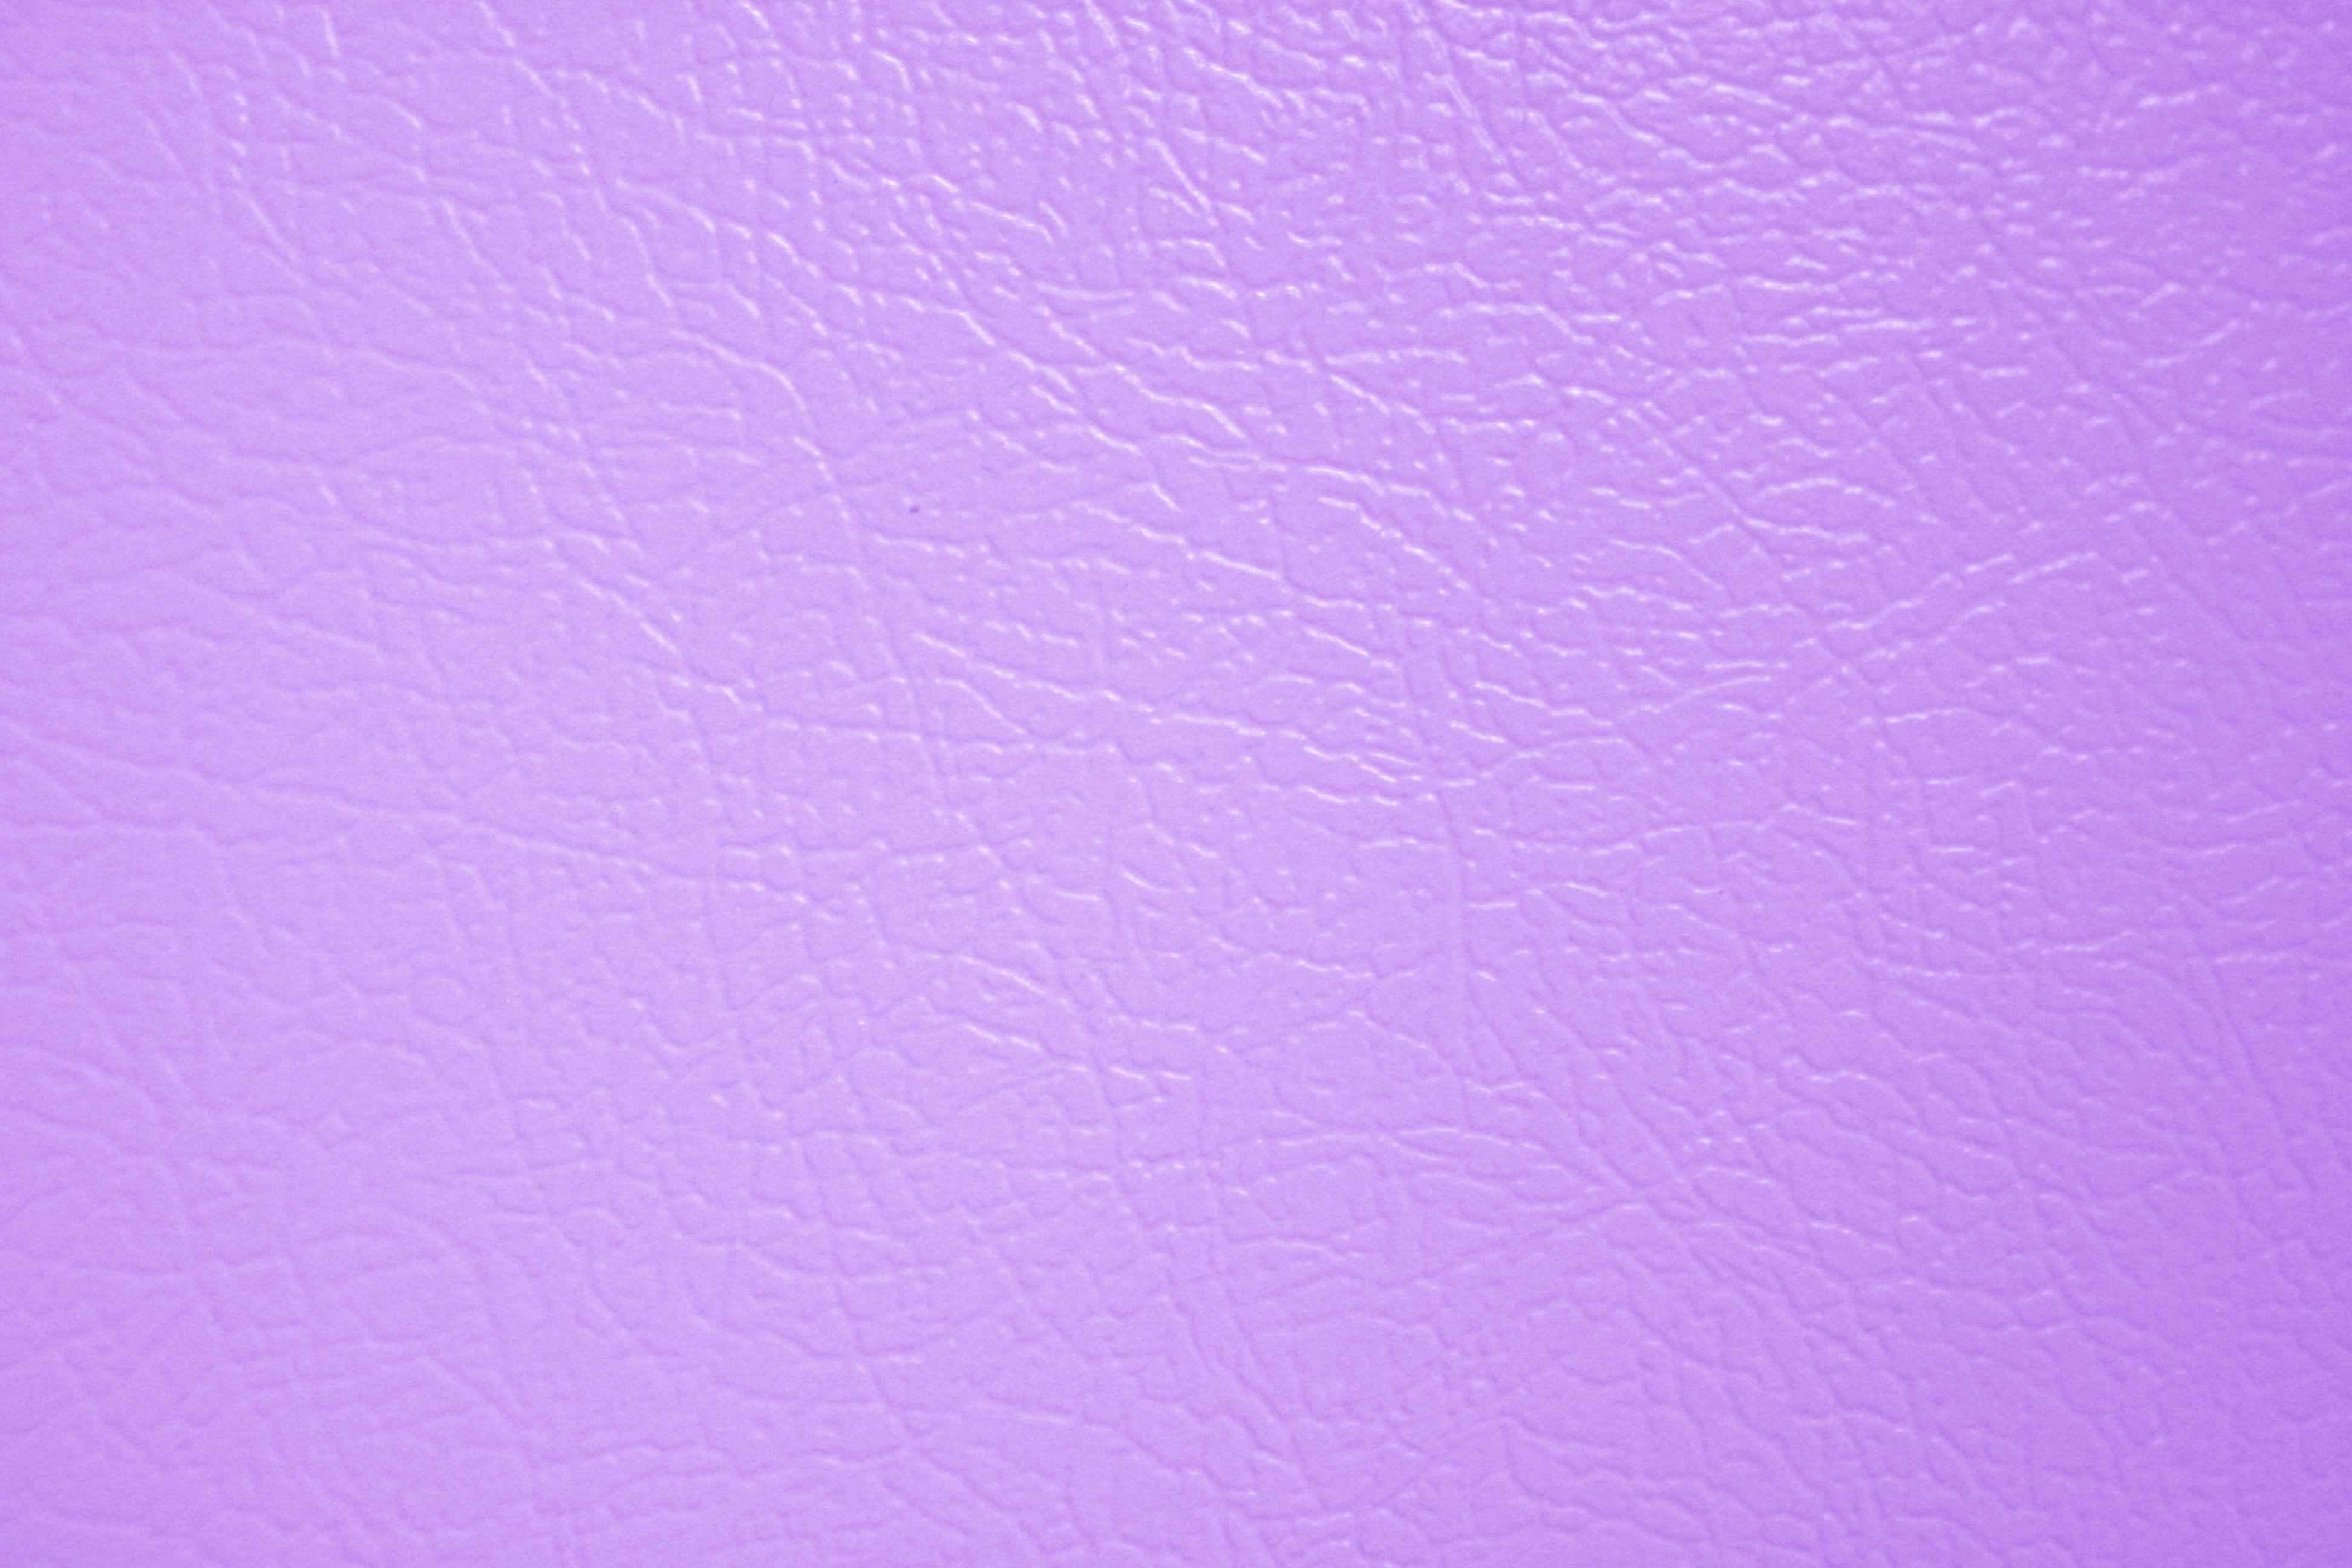 Lavender Faux Leather Texture Picture. Free Photograph. Photo